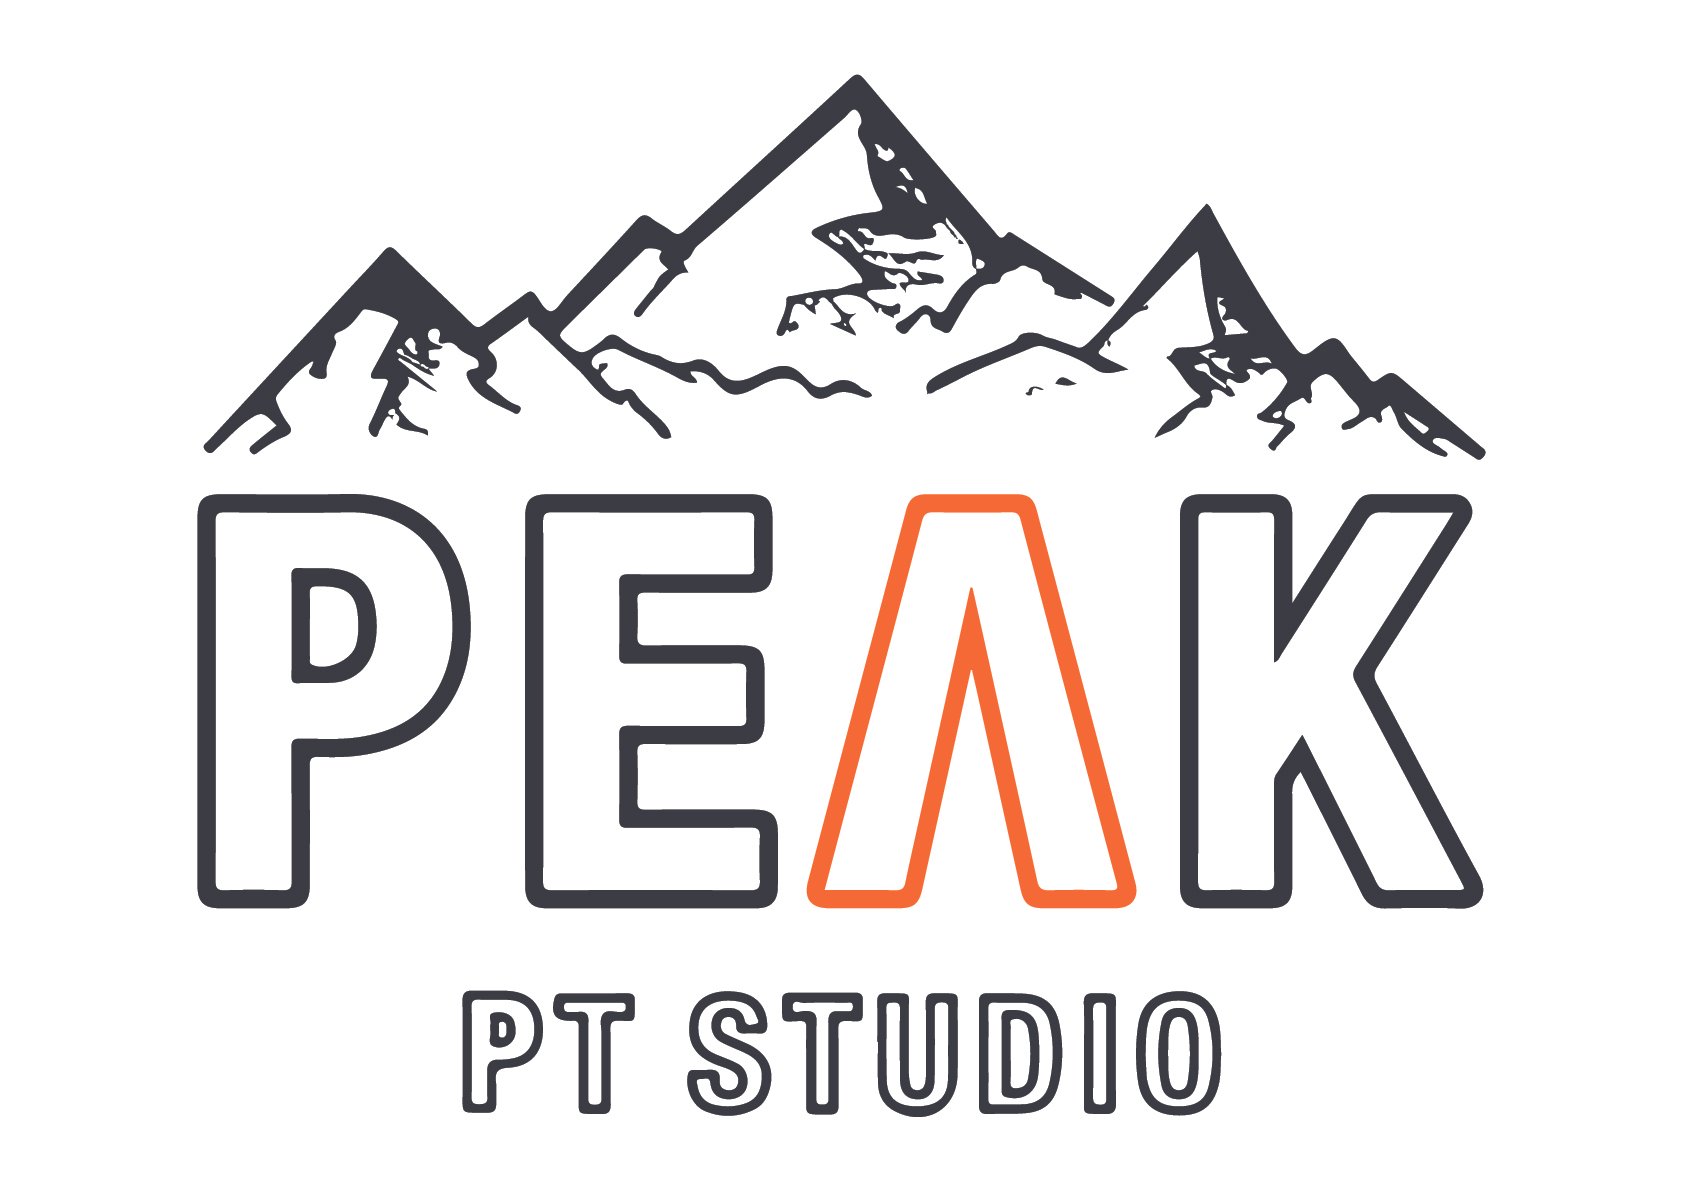 Peak Studio PT - Personal Training in Whiteley